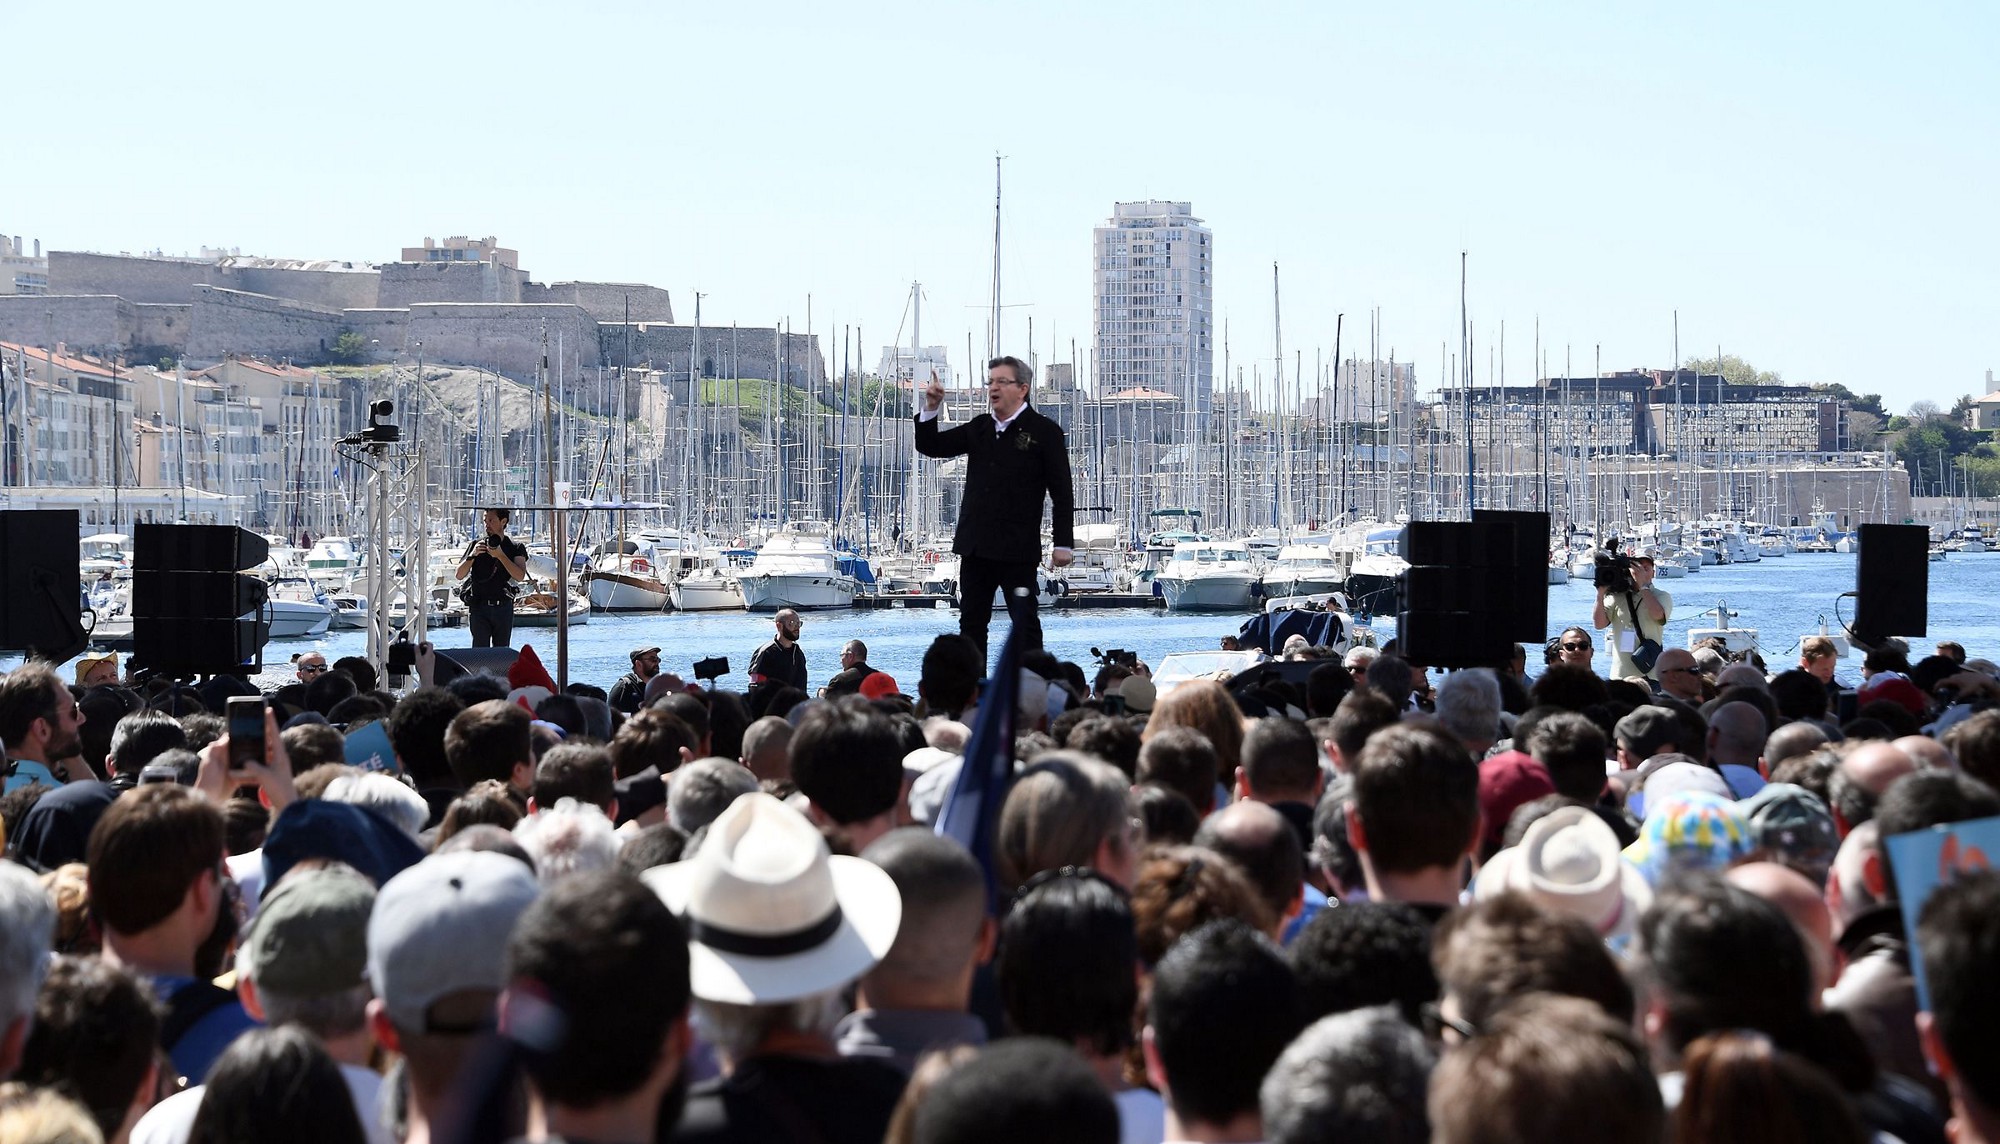 Jean-Luc Mélenchon speaking at Marseille 04/09/2017